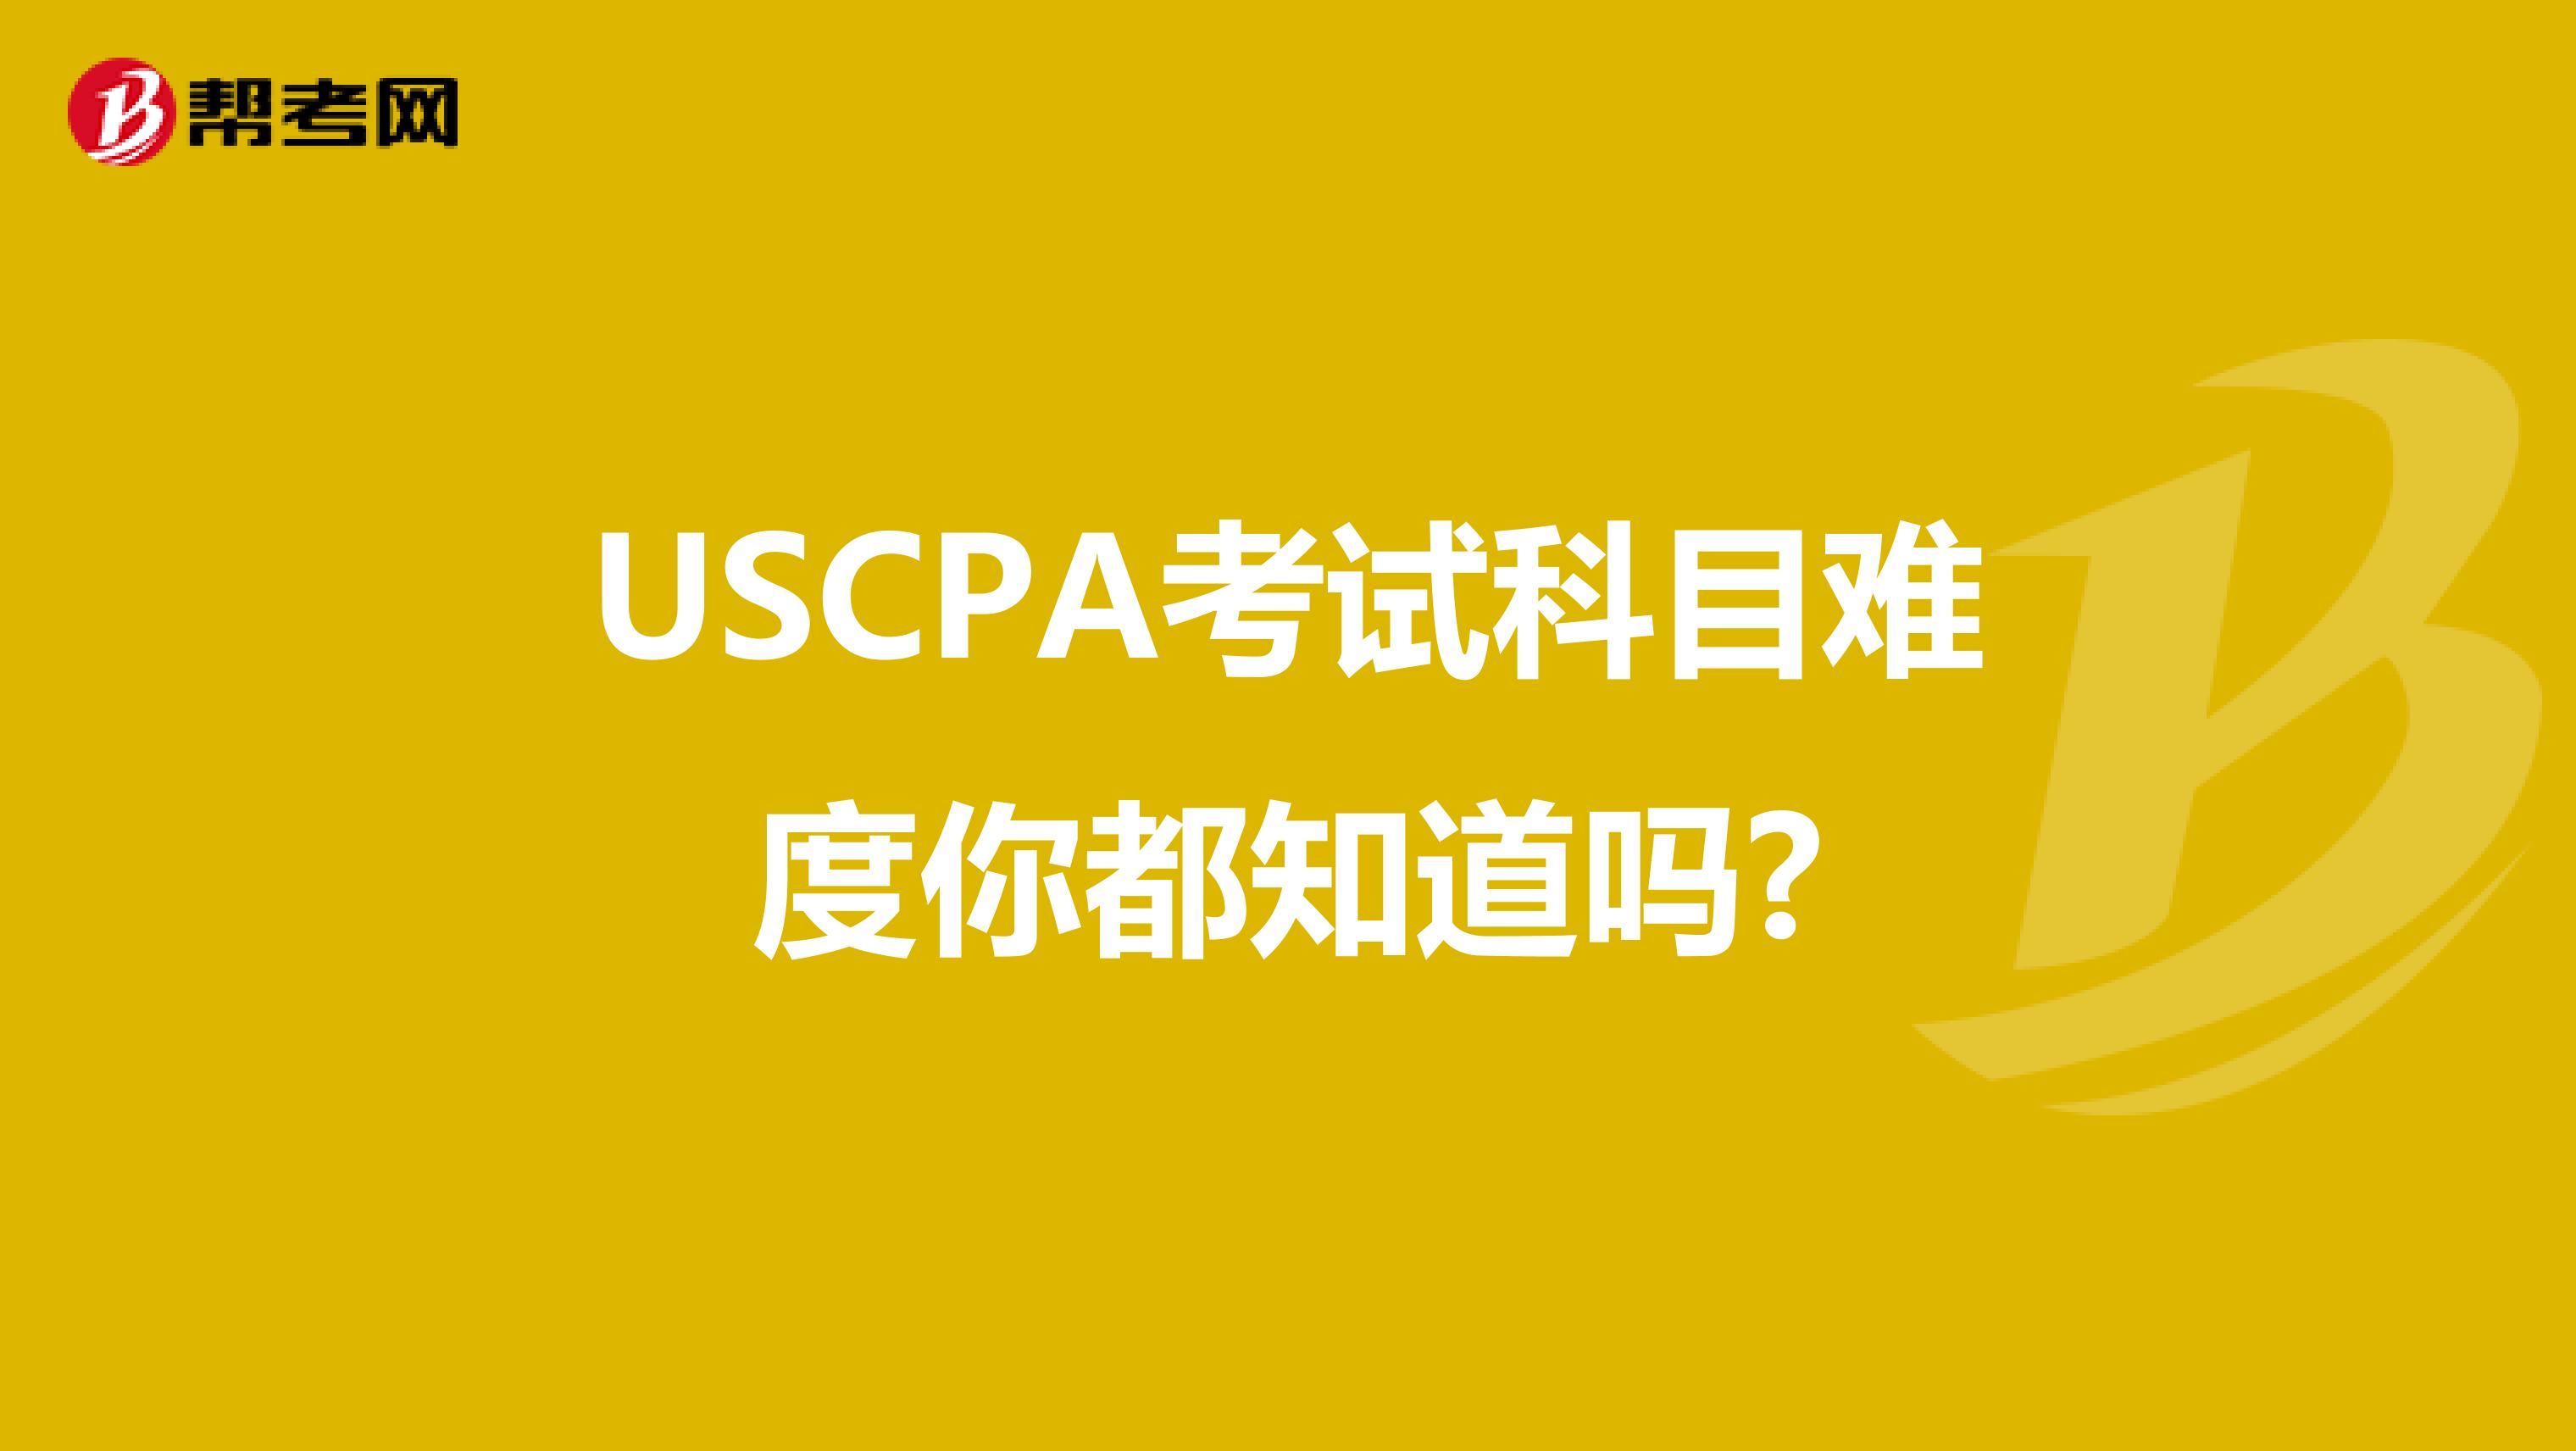 USCPA考试科目难度你都知道吗?